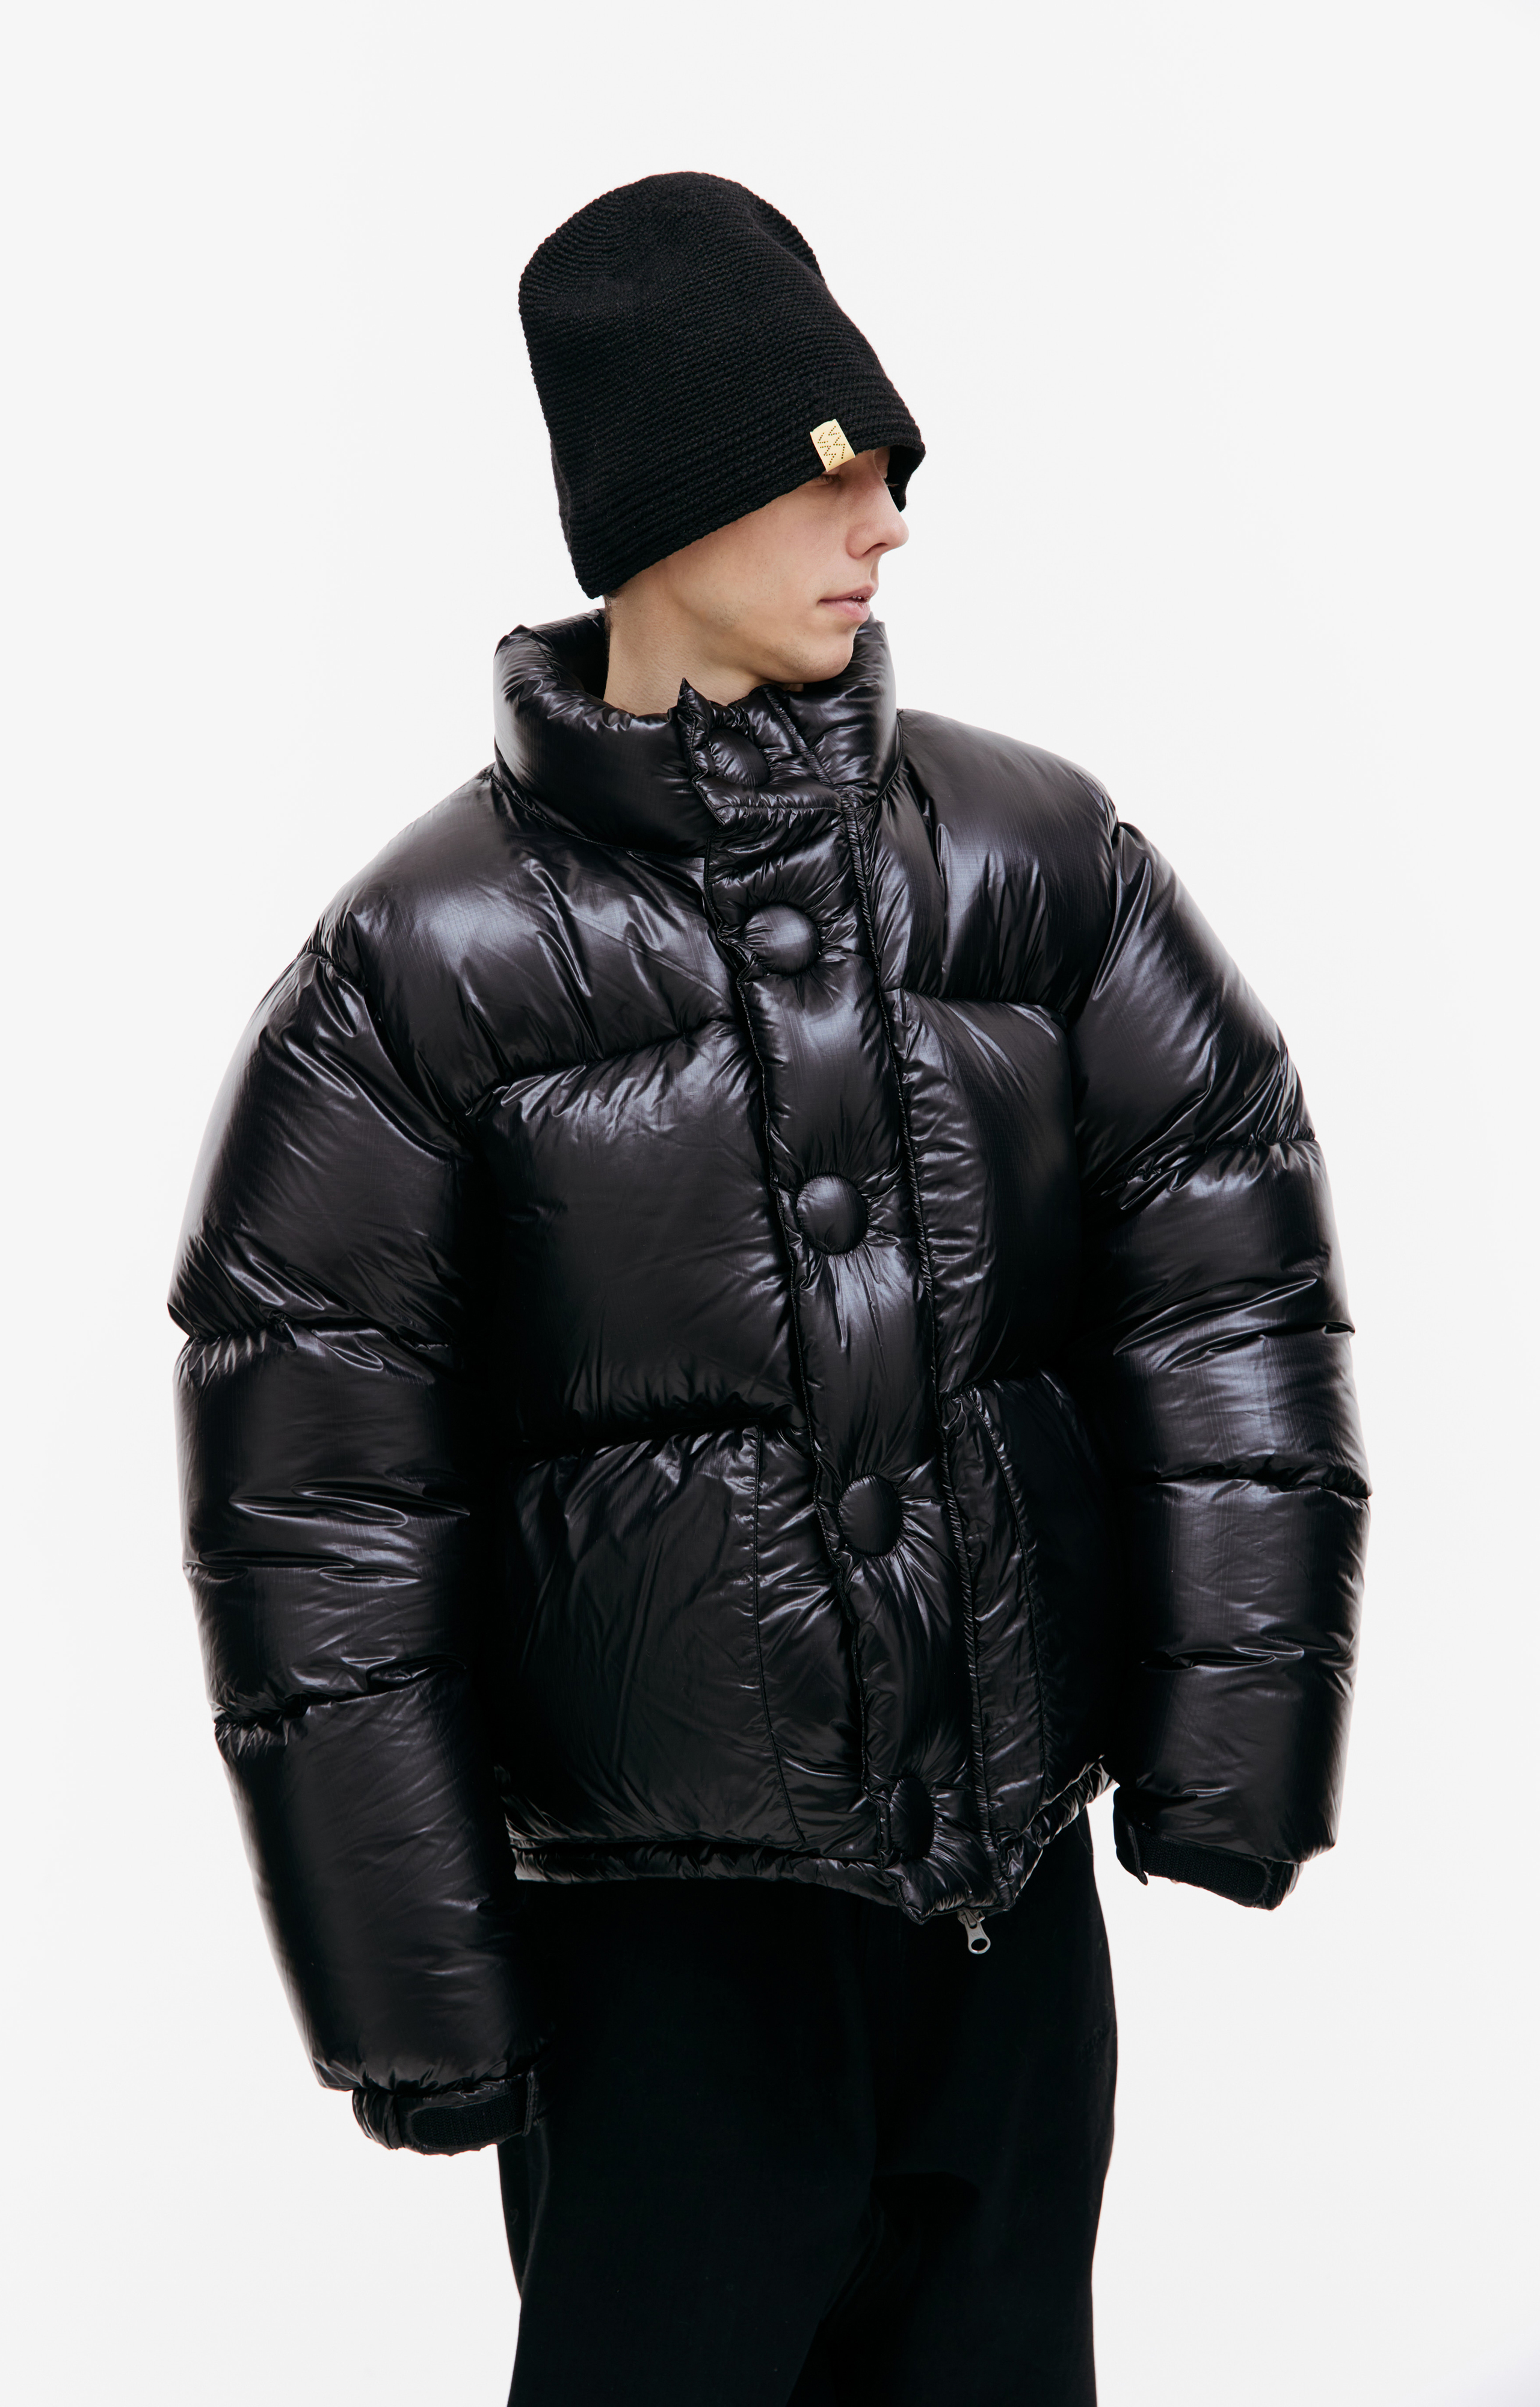 Buy Readymade men black down jacket for $2,967 online on SV77, RE